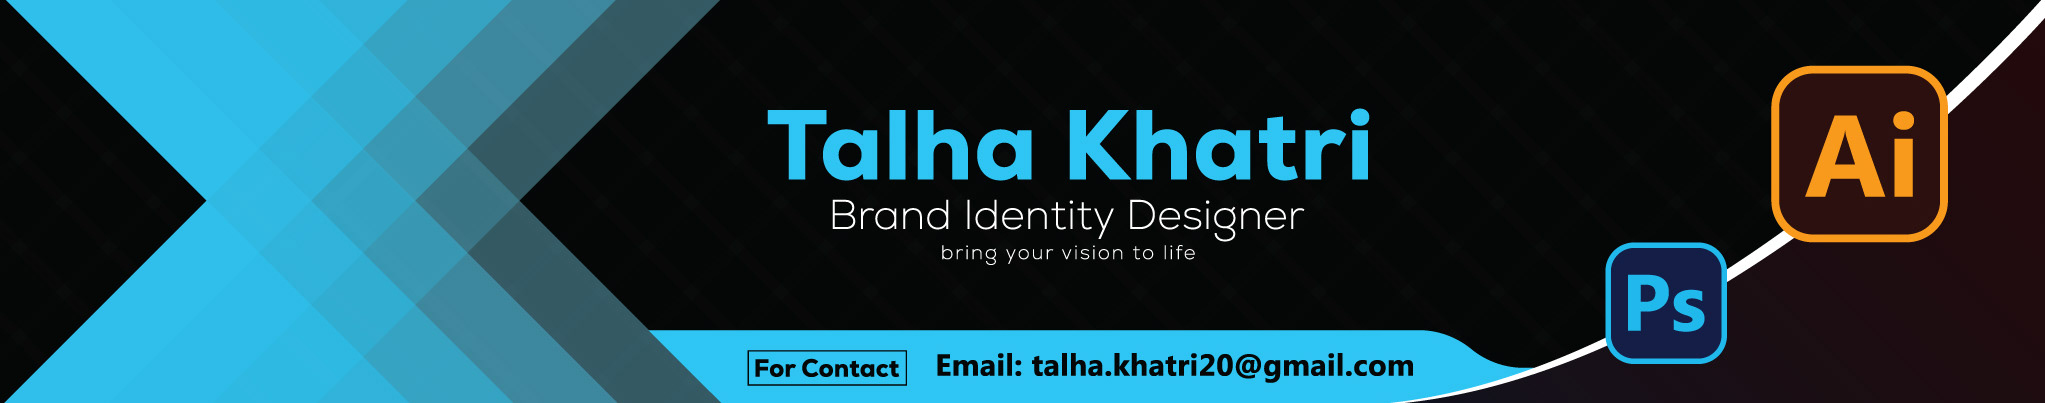 Talha Khatris profilbanner